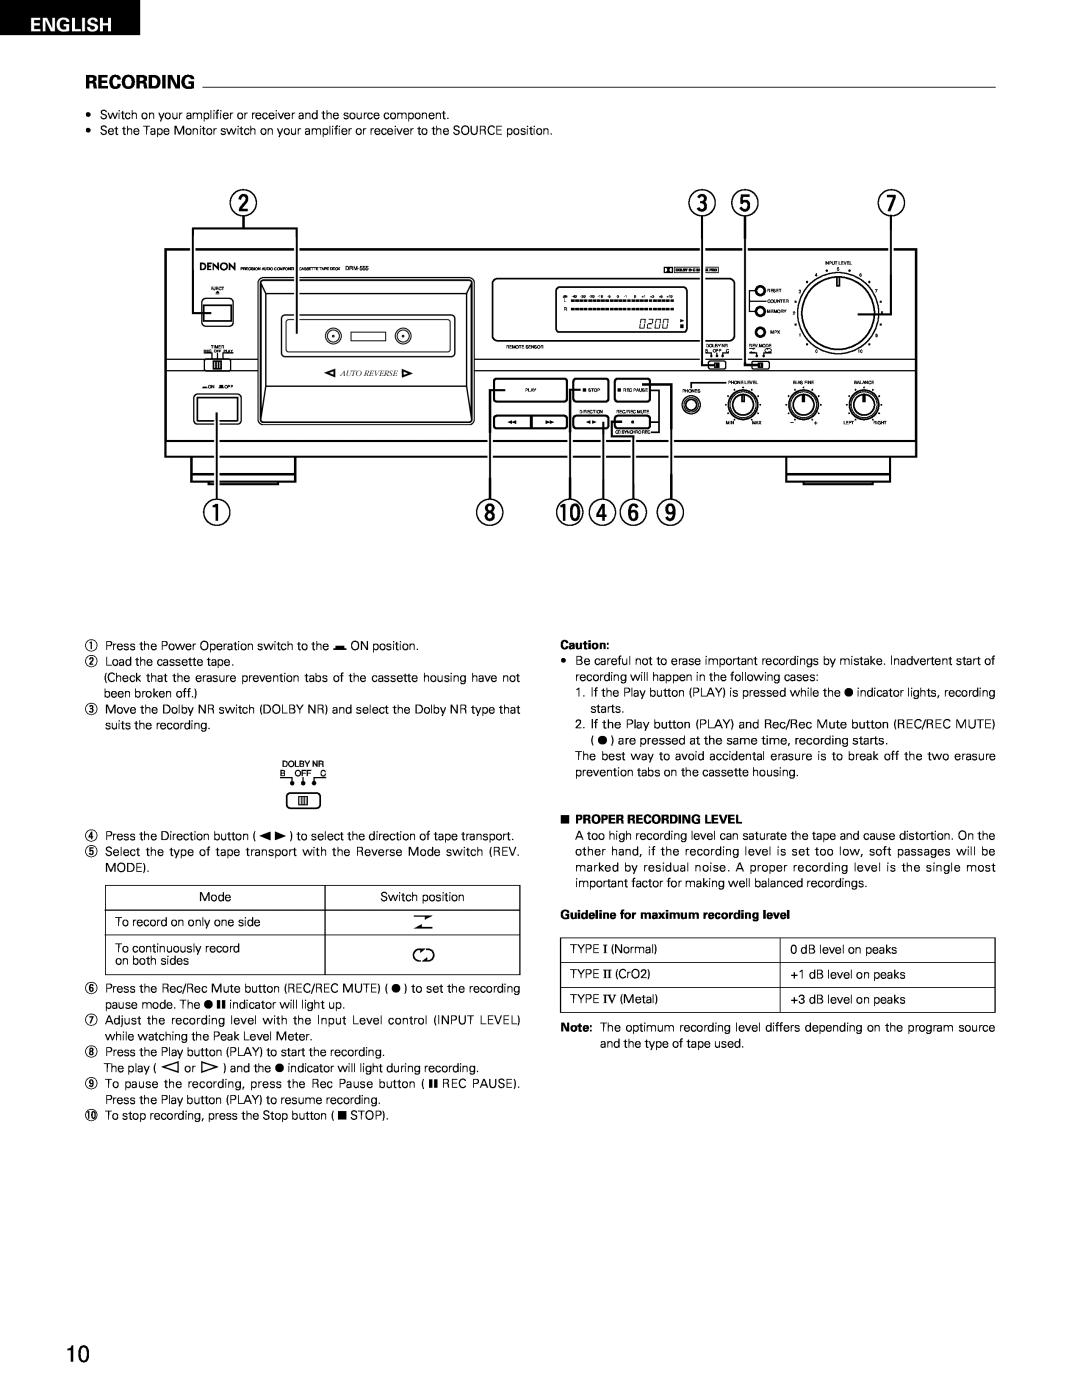 Denon DRM-555 manual Recording, English, 2PROPER RECORDING LEVEL, Guideline for maximum recording level 